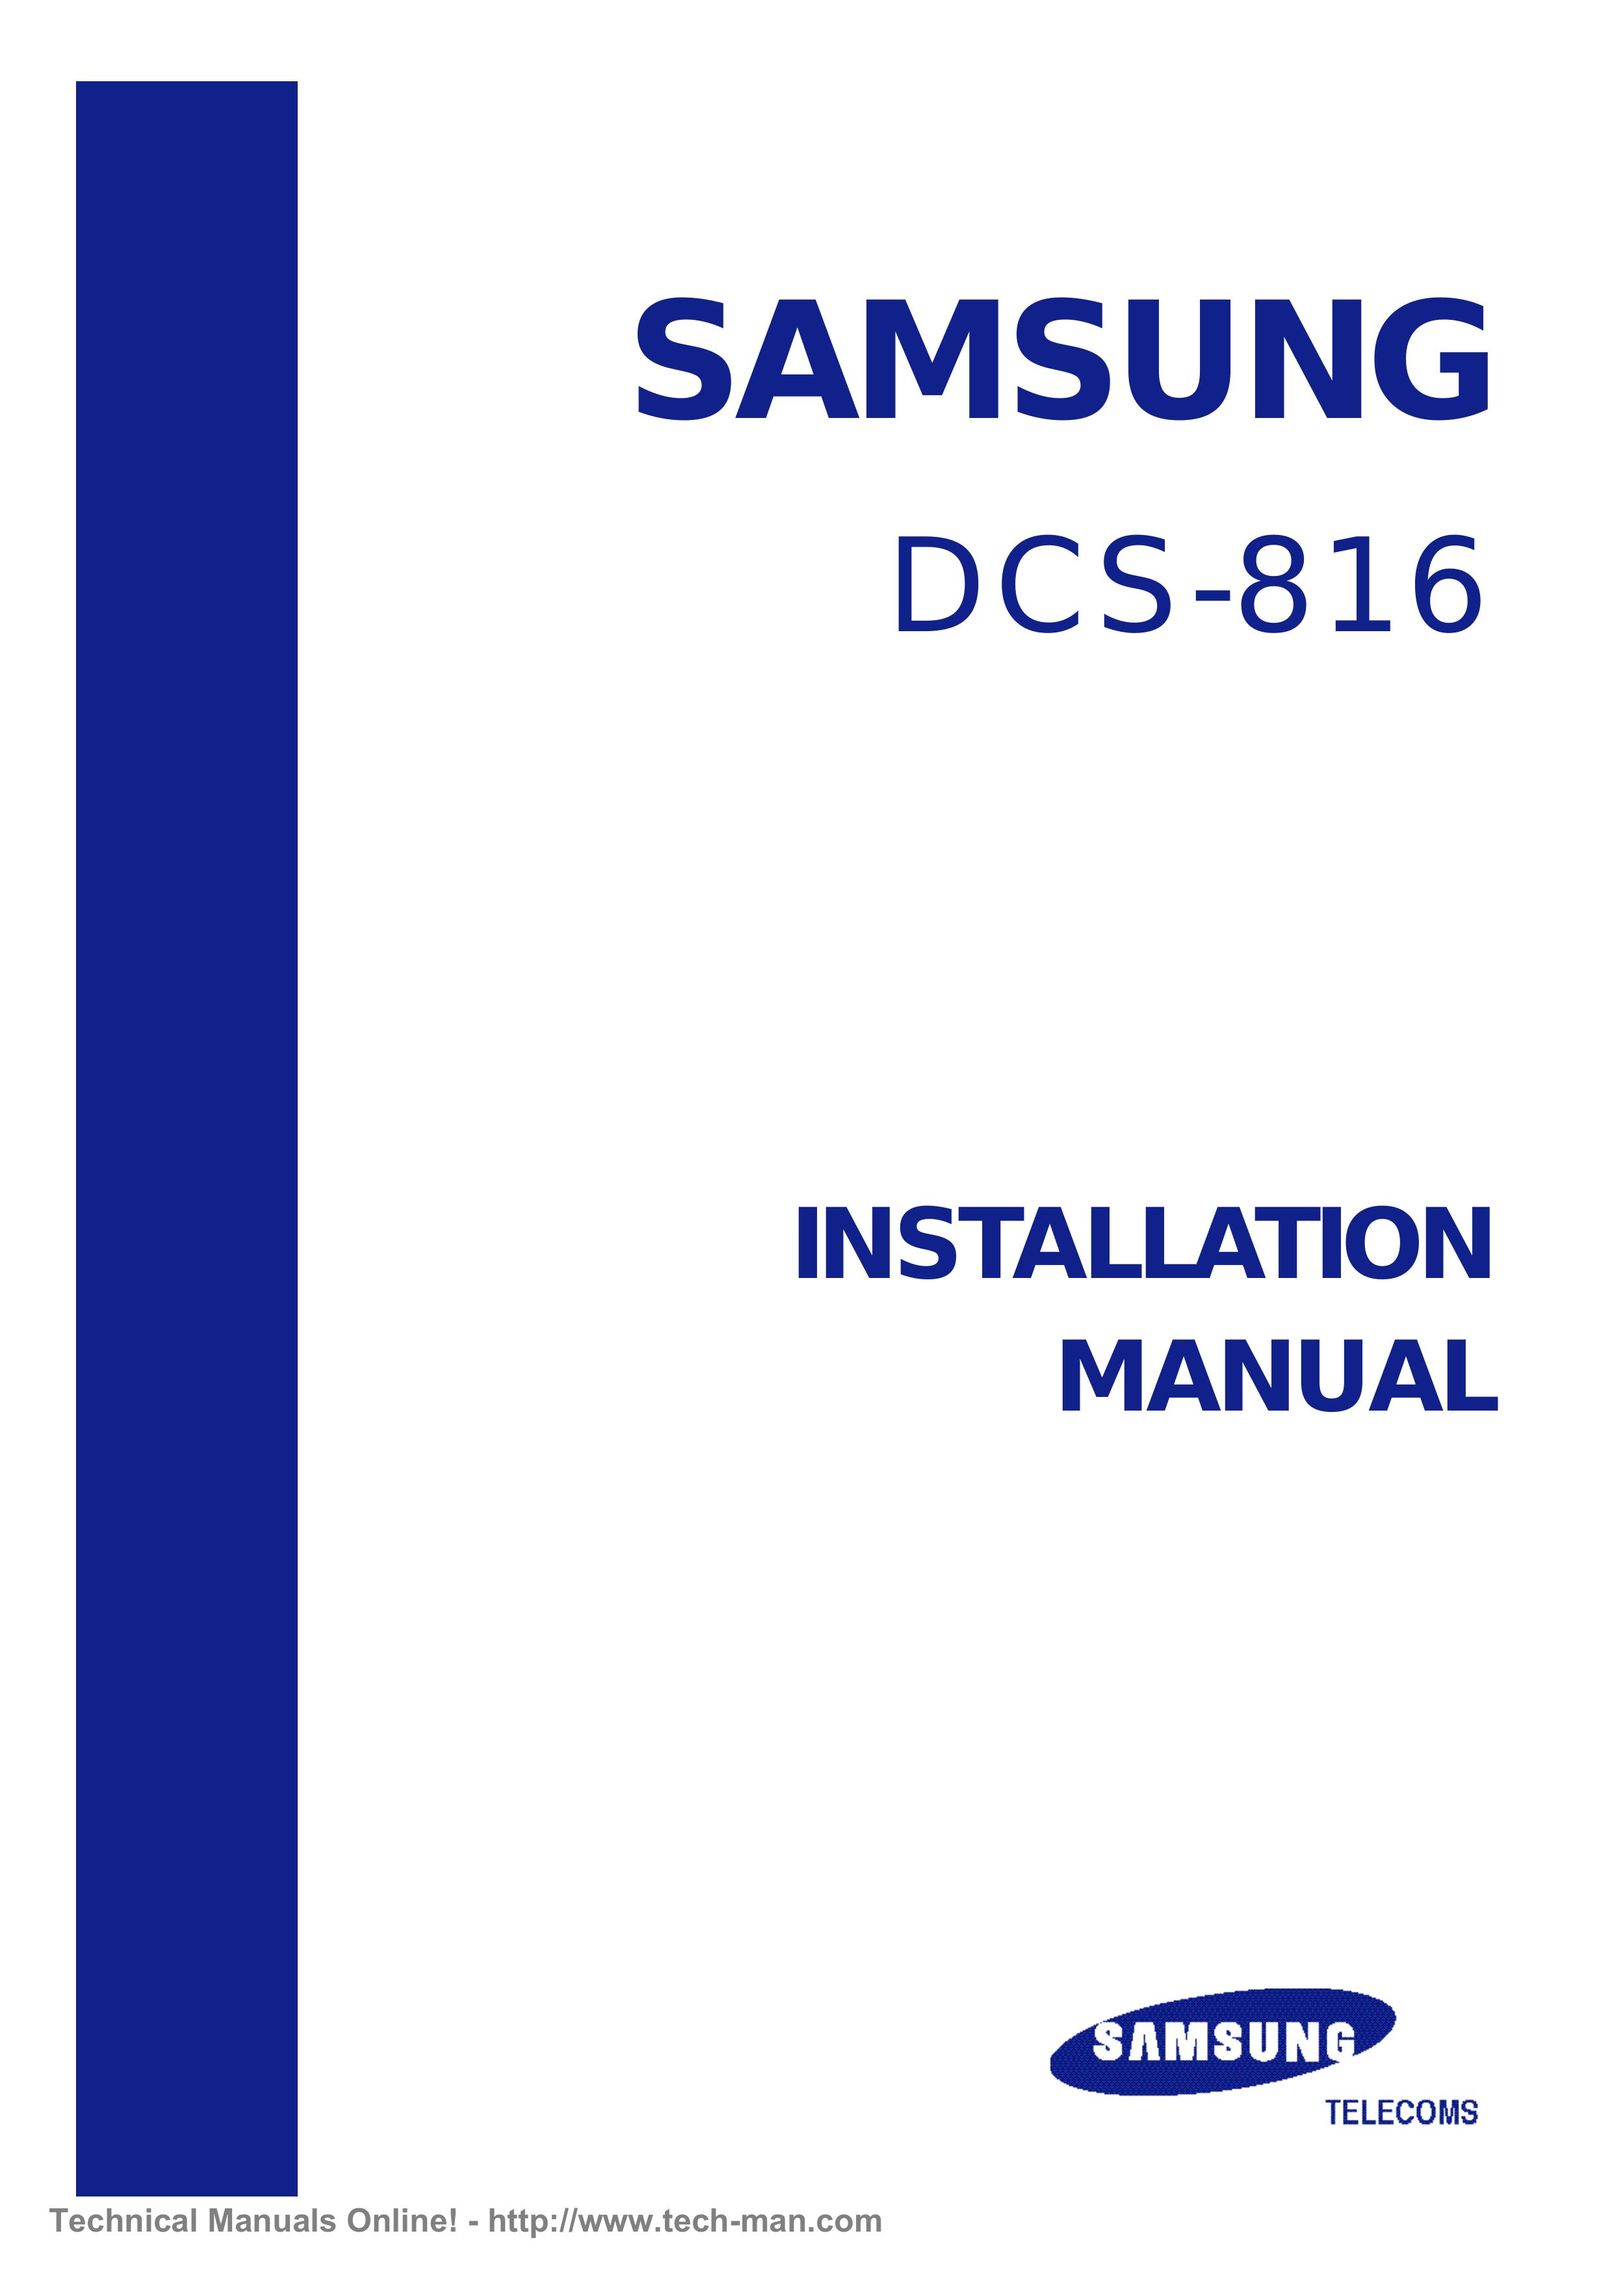 Samsung DCS-816 Telephone User Manual